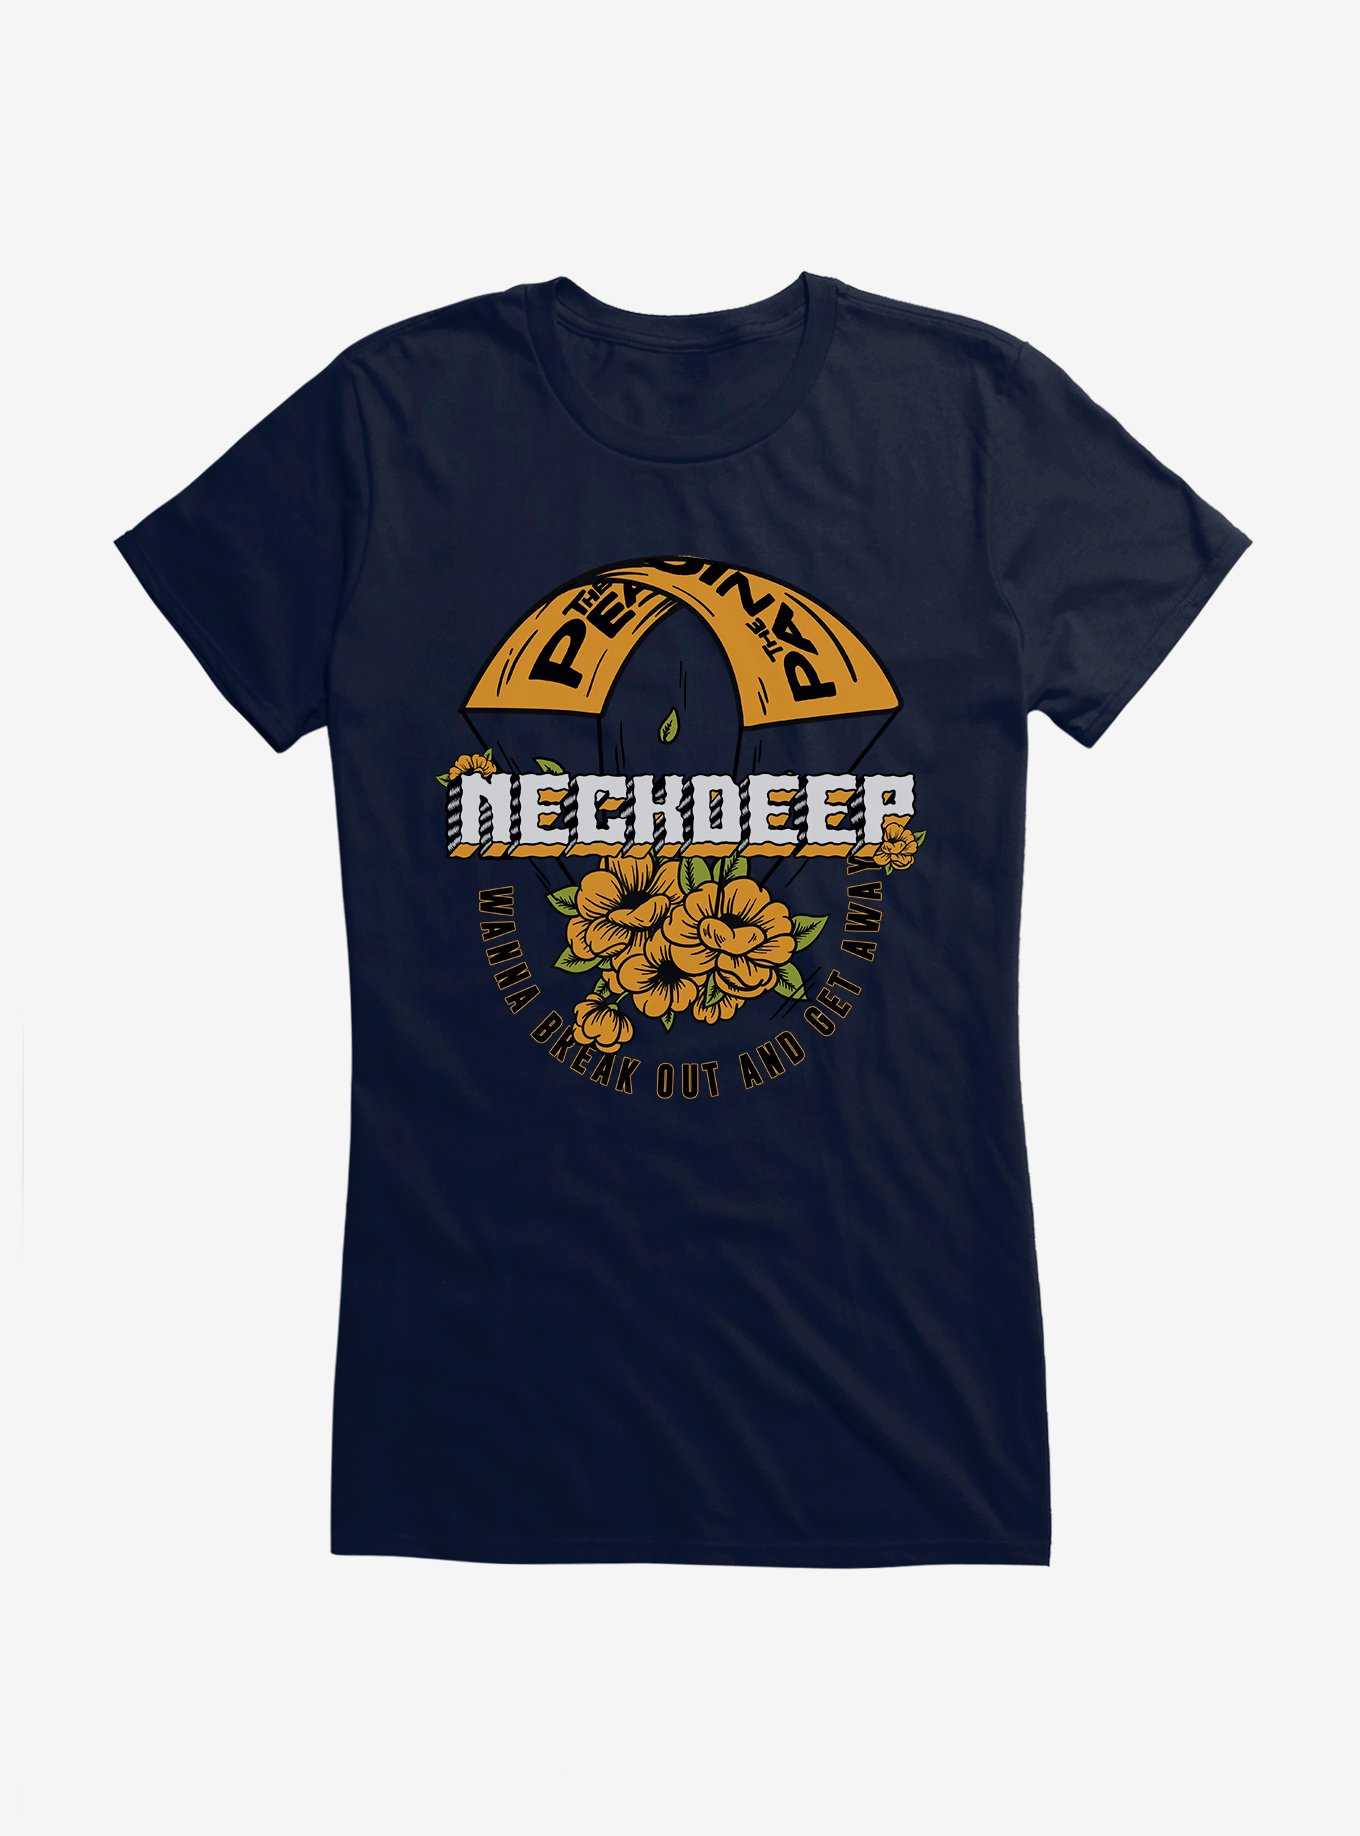 Neck Deep Parachute Girls T-Shirt, , hi-res